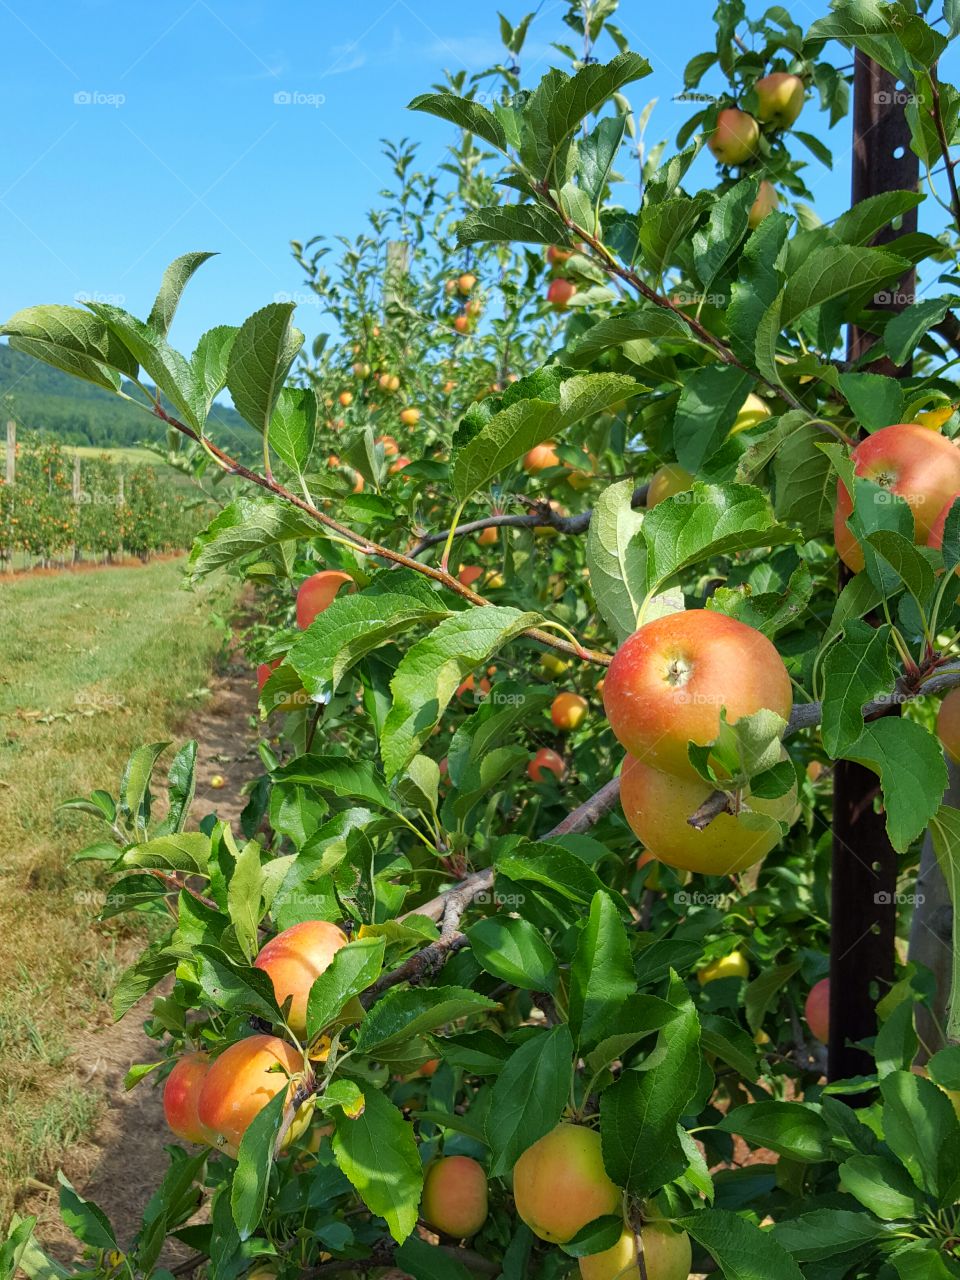 Close-up of apple tree